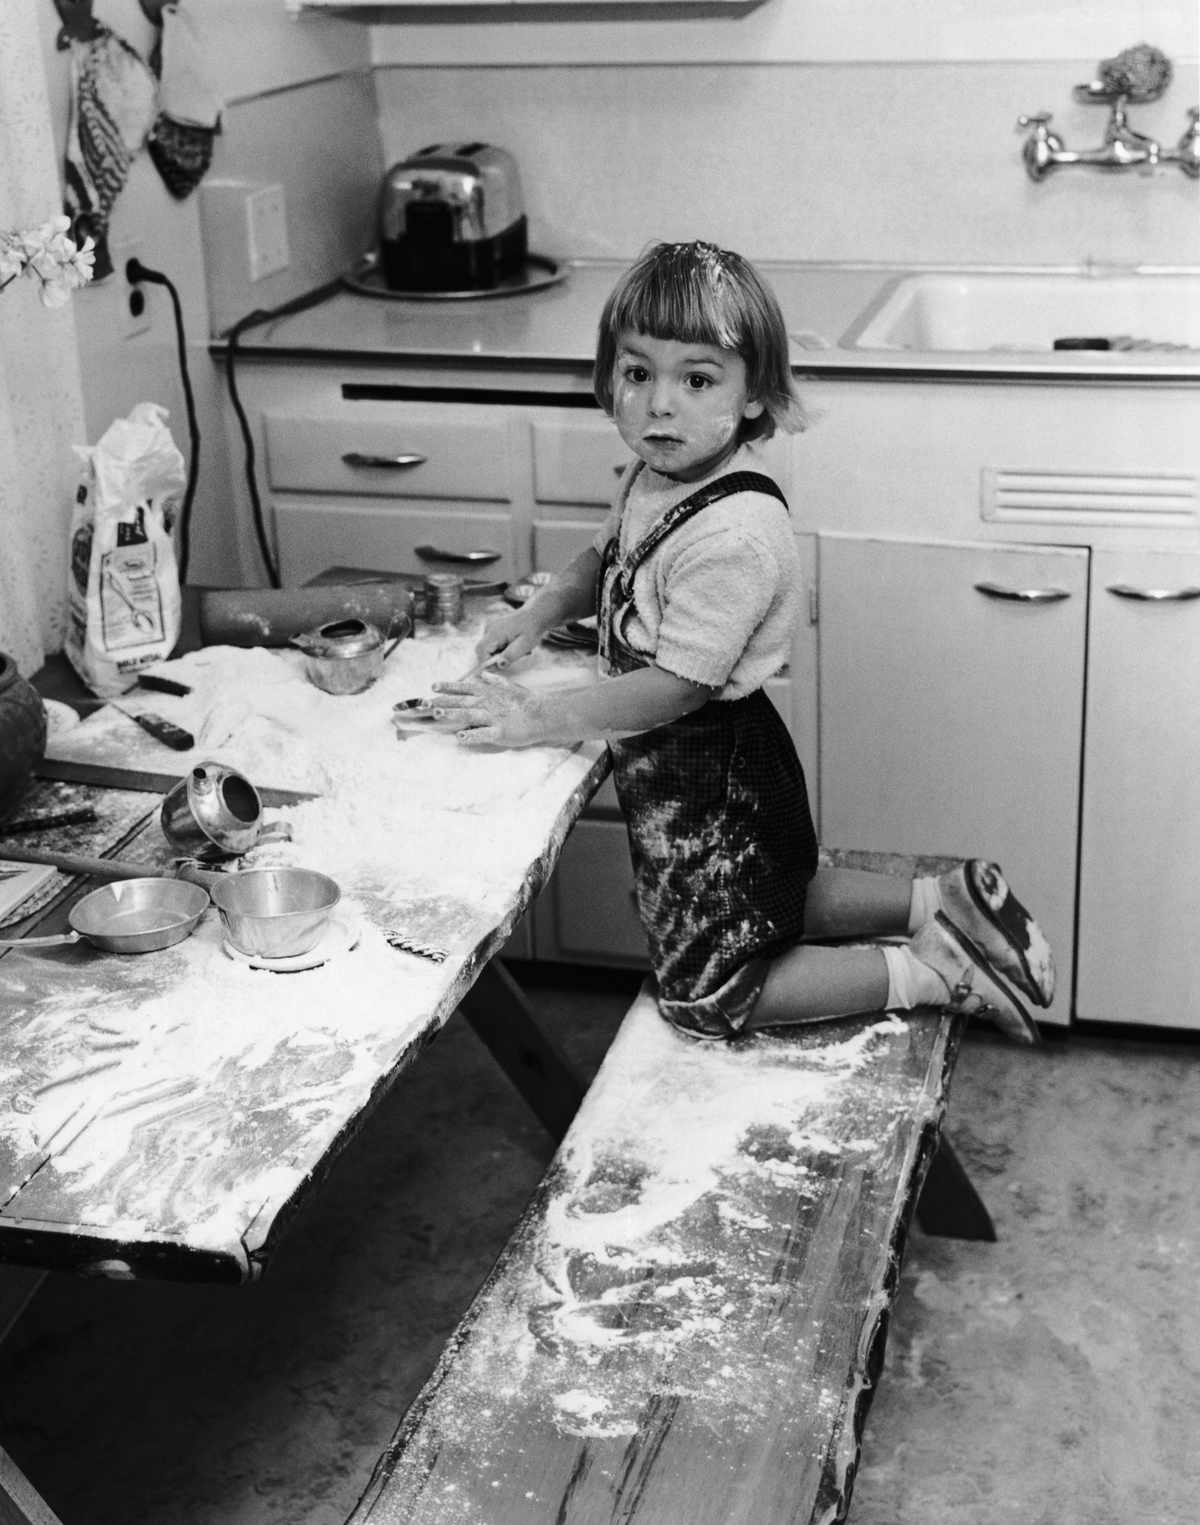 Toddler Baking with Flour Mess